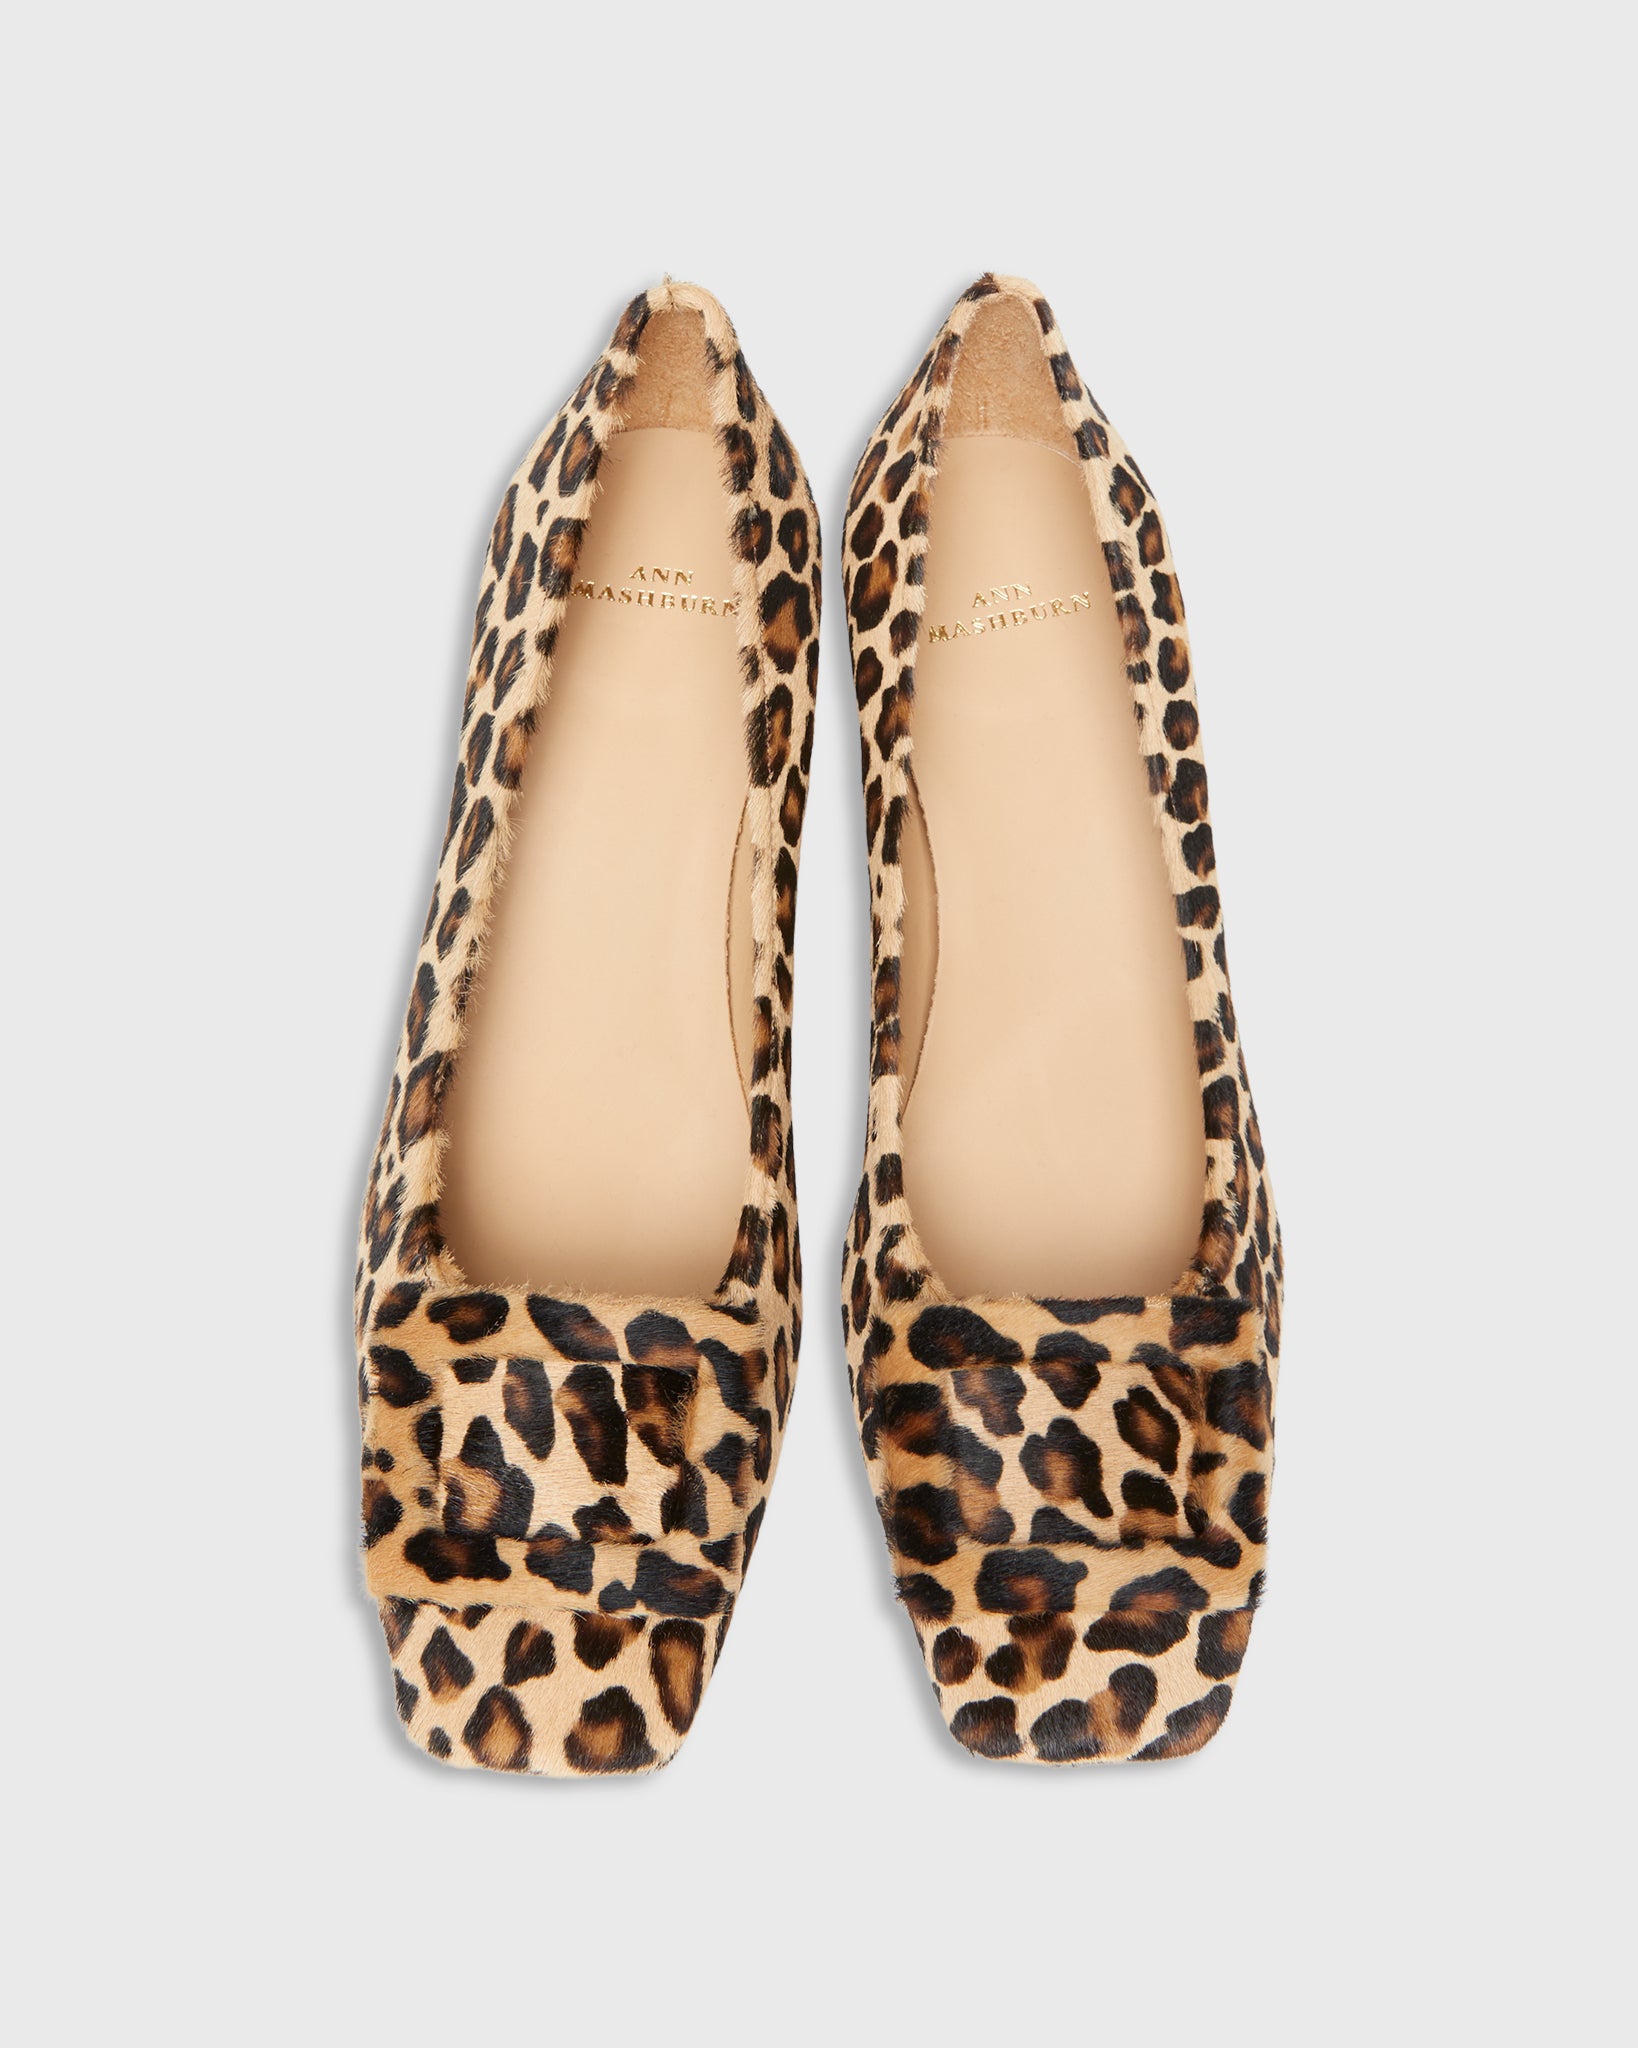 Buckle Heel in Leopard Calf Hair | Shop Ann Mashburn